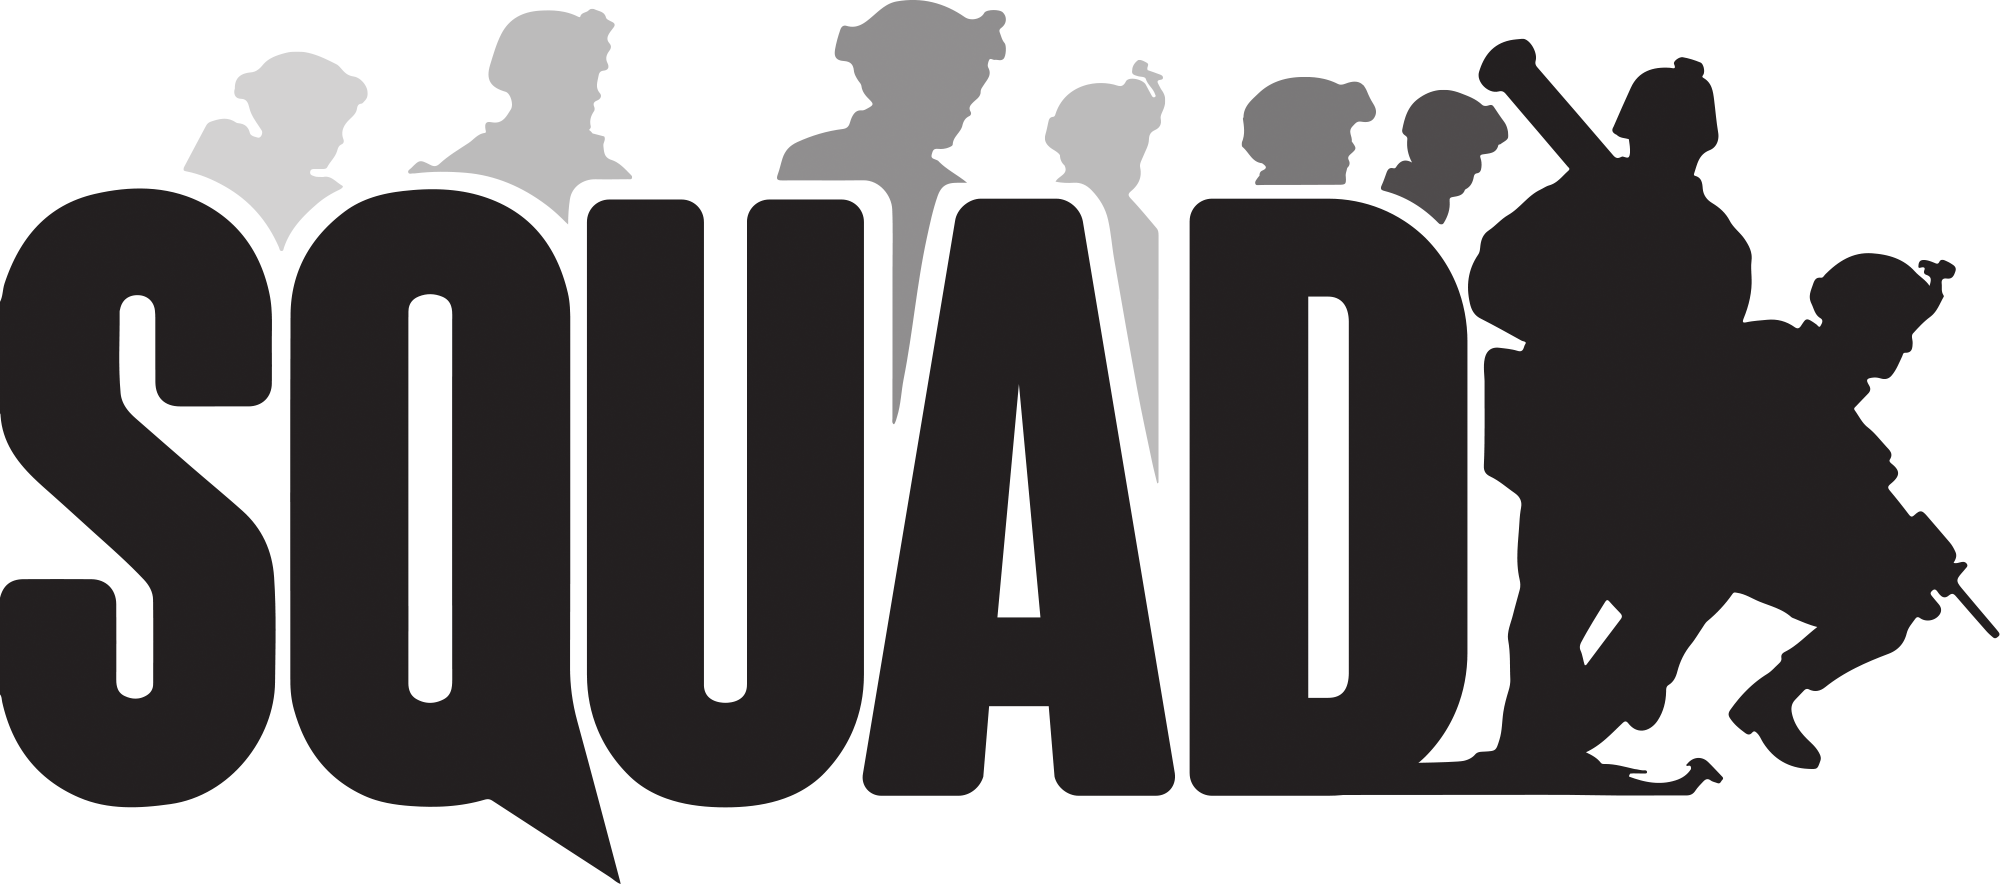 Military Squad Logos